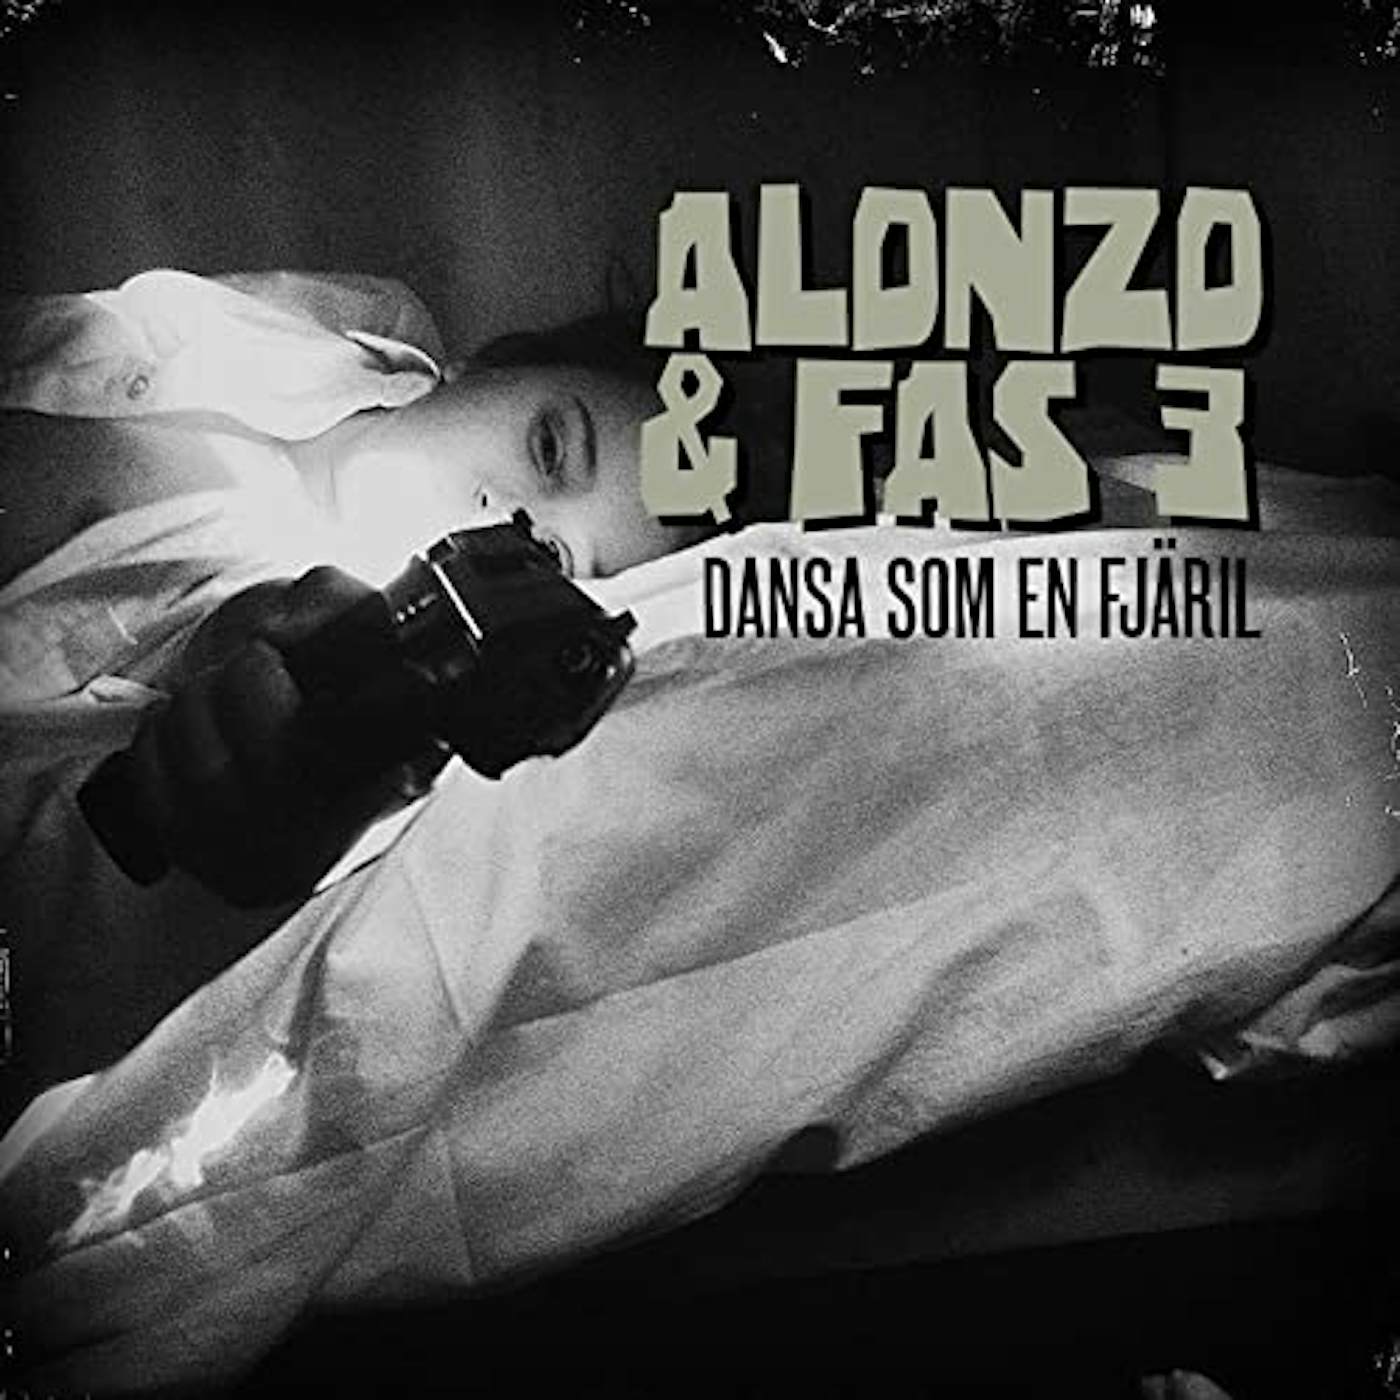 Alonzo Fas 3 Vinyl Record